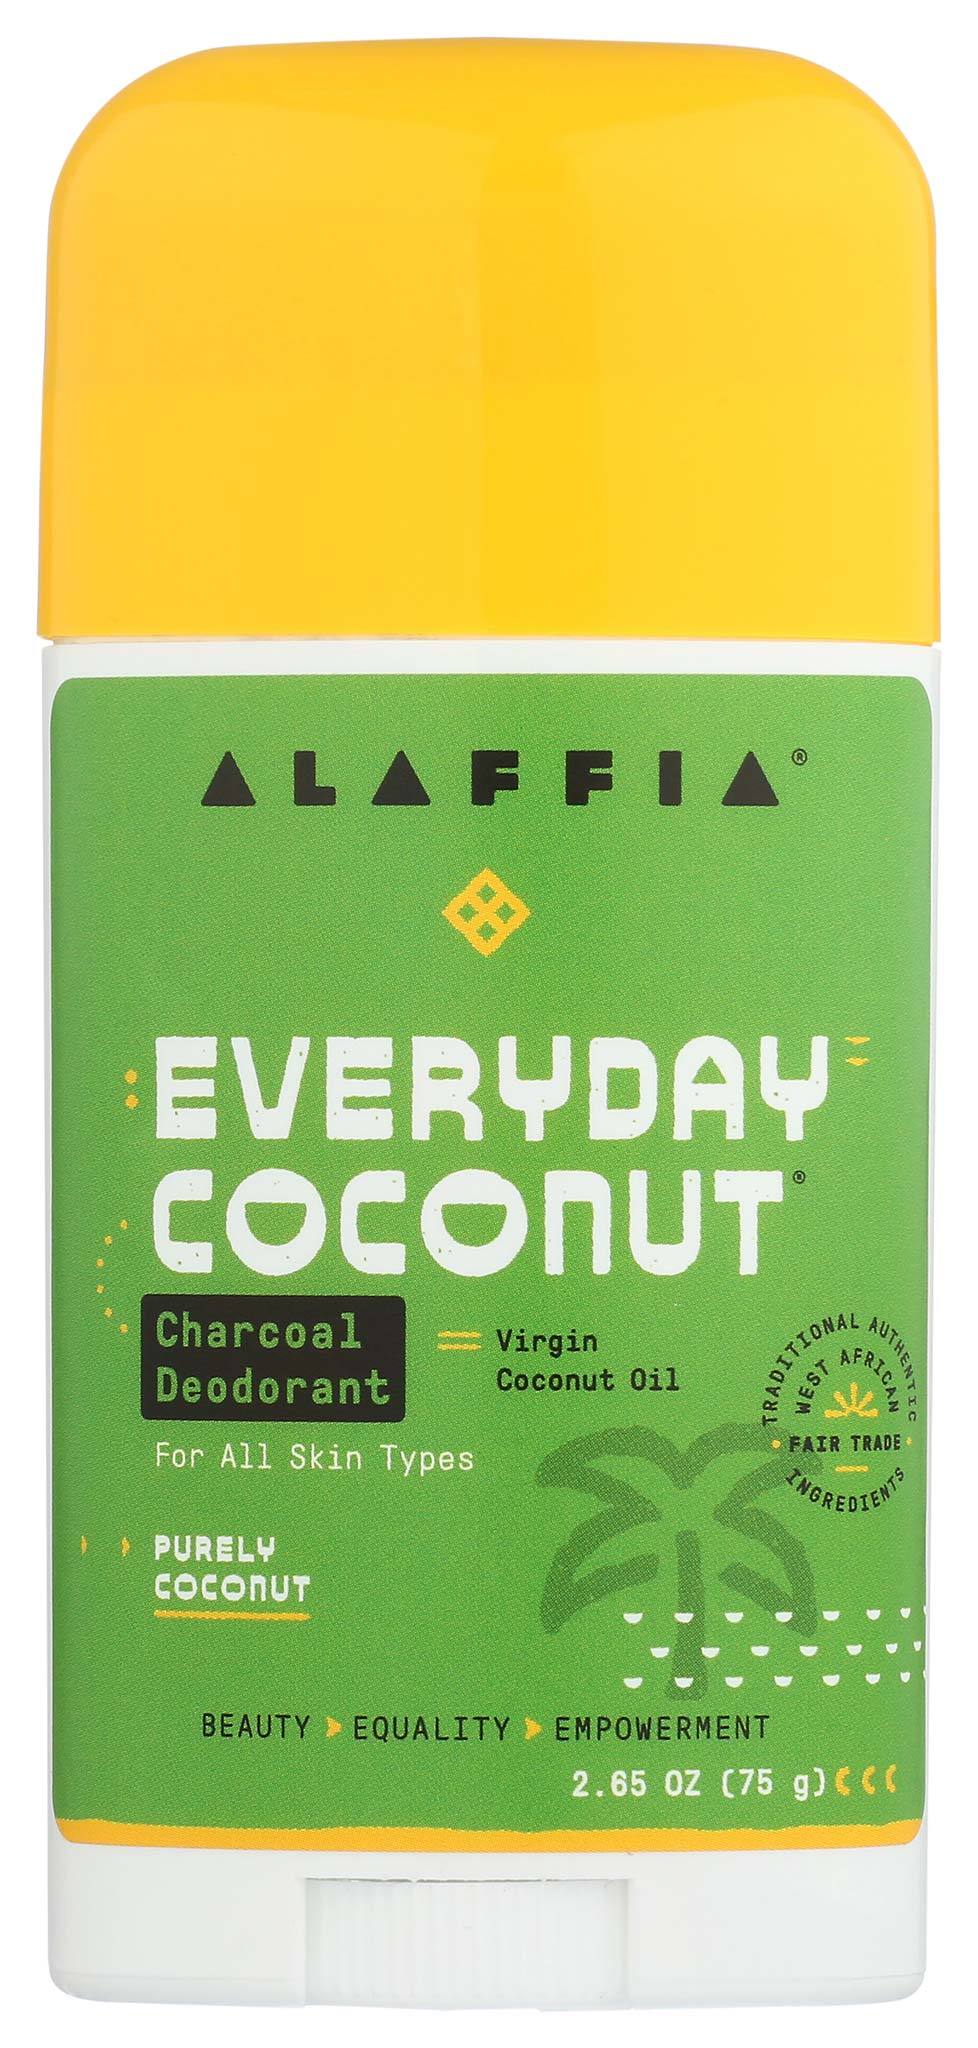 alaffia everyday coconut deodorant - charcoal & purely coconut 75g